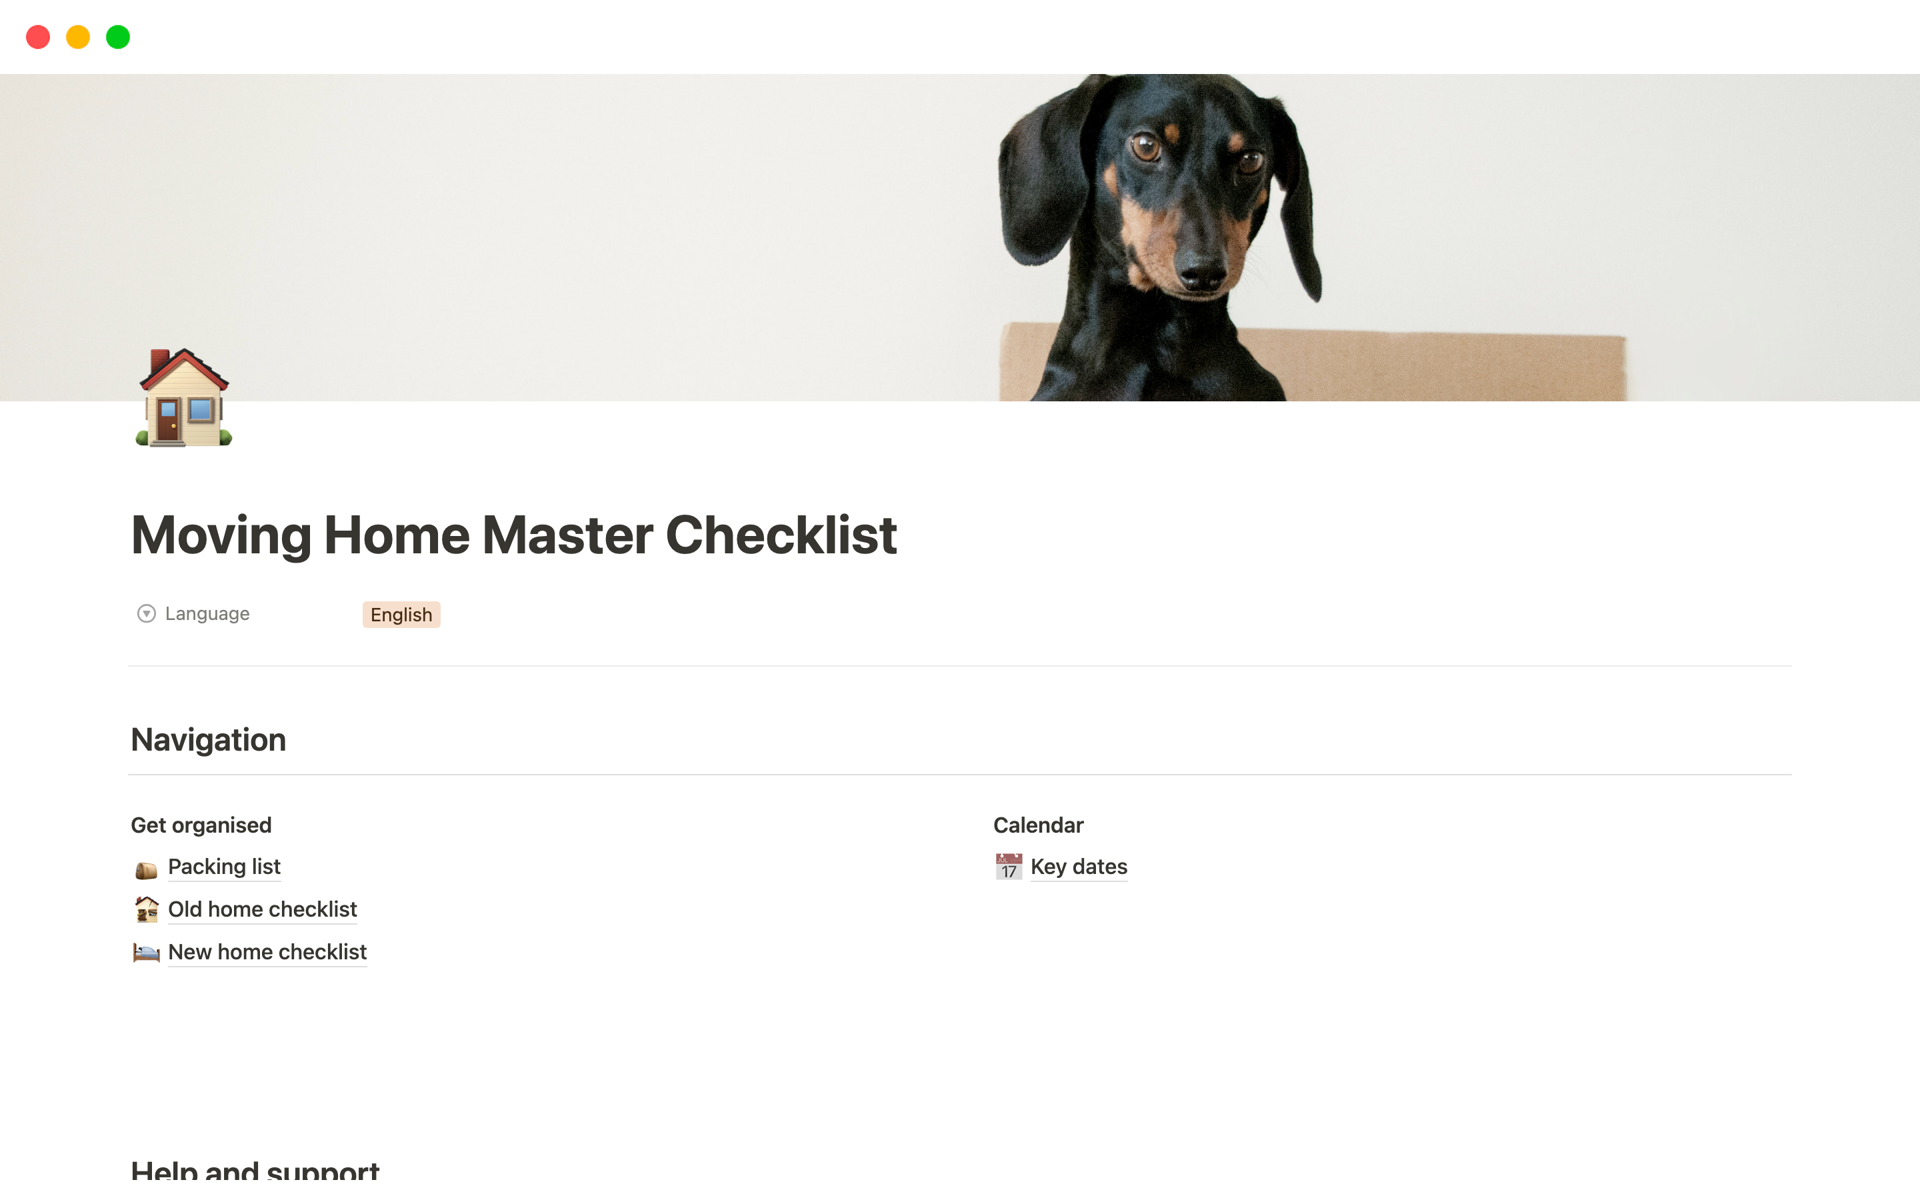 Aperçu du modèle de Moving Home Master Checklist